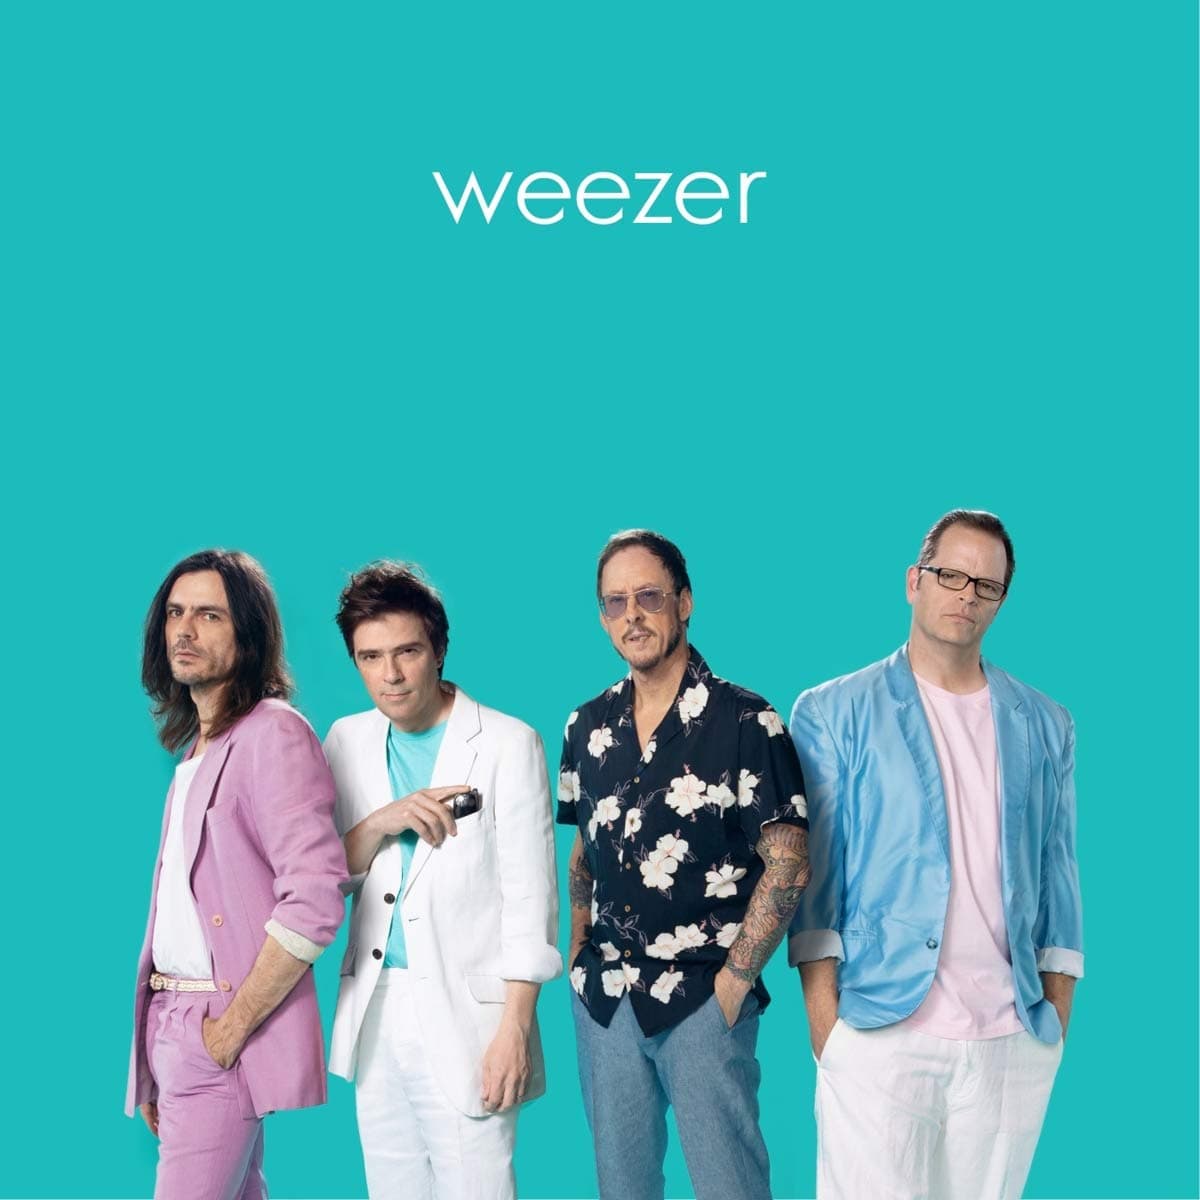 Weezer - Weezer (Teal Album) - Third Eye